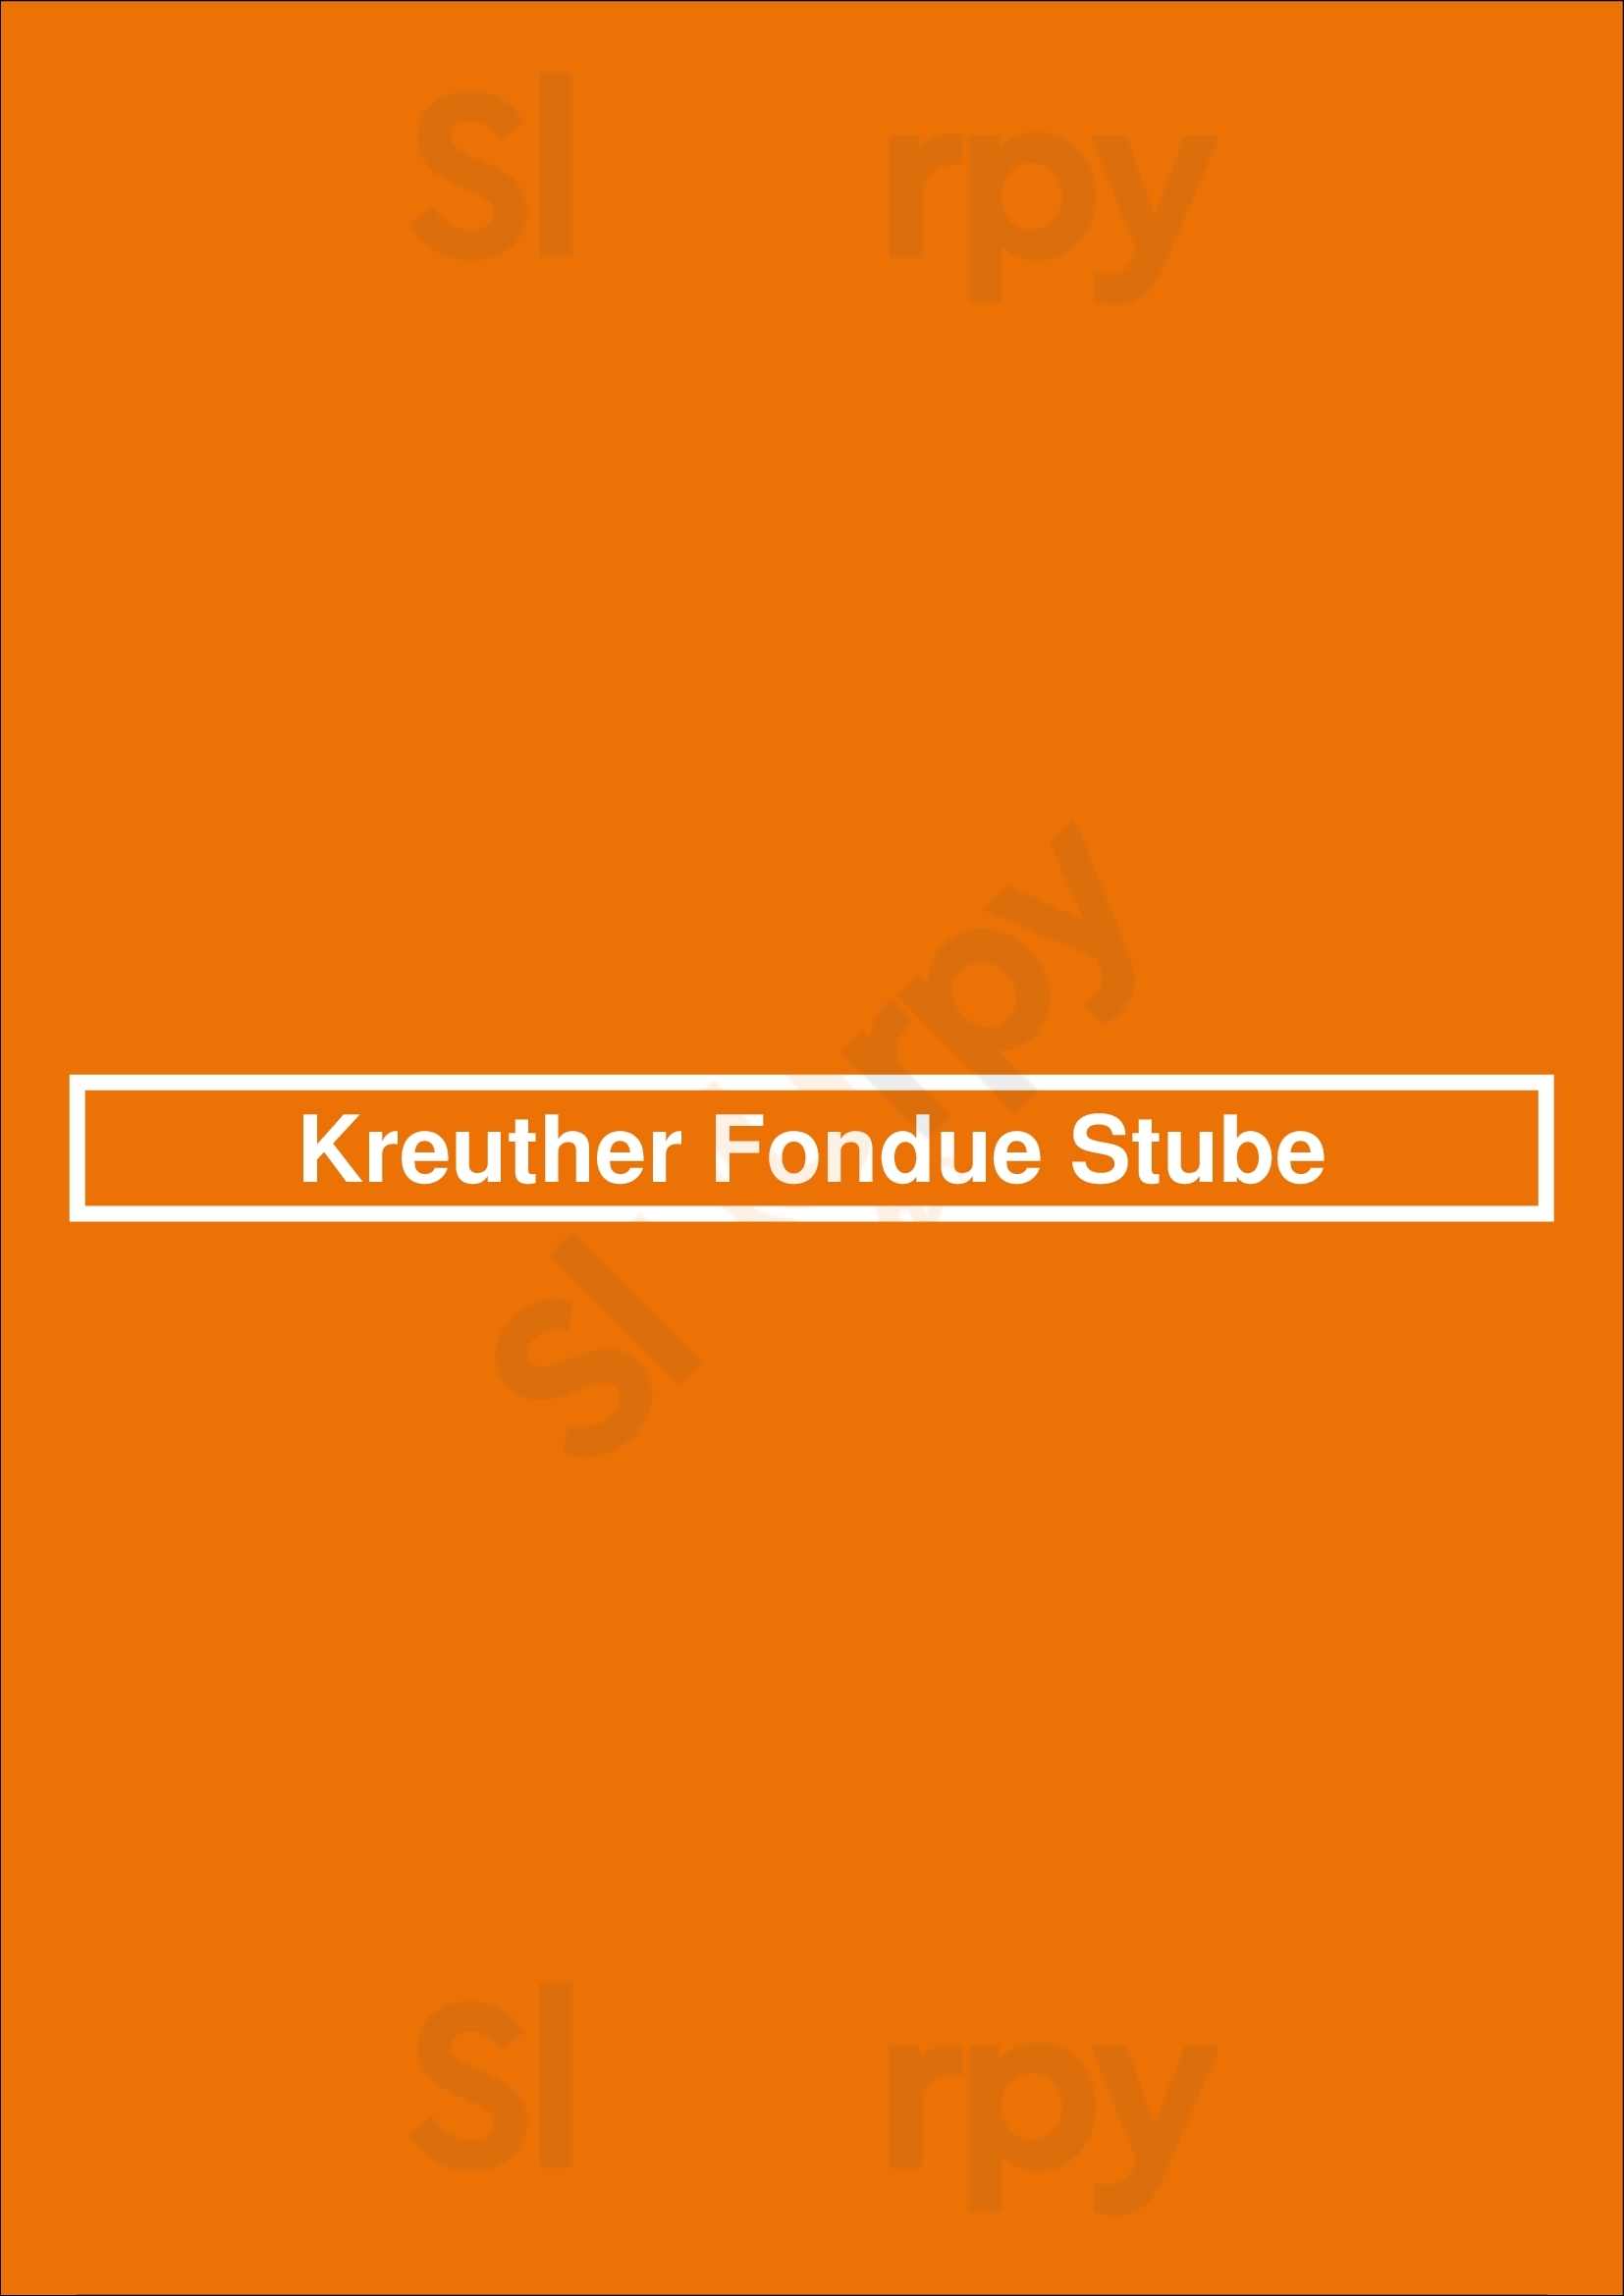 Kreuther Fondue Stube Rottach-Egern Menu - 1